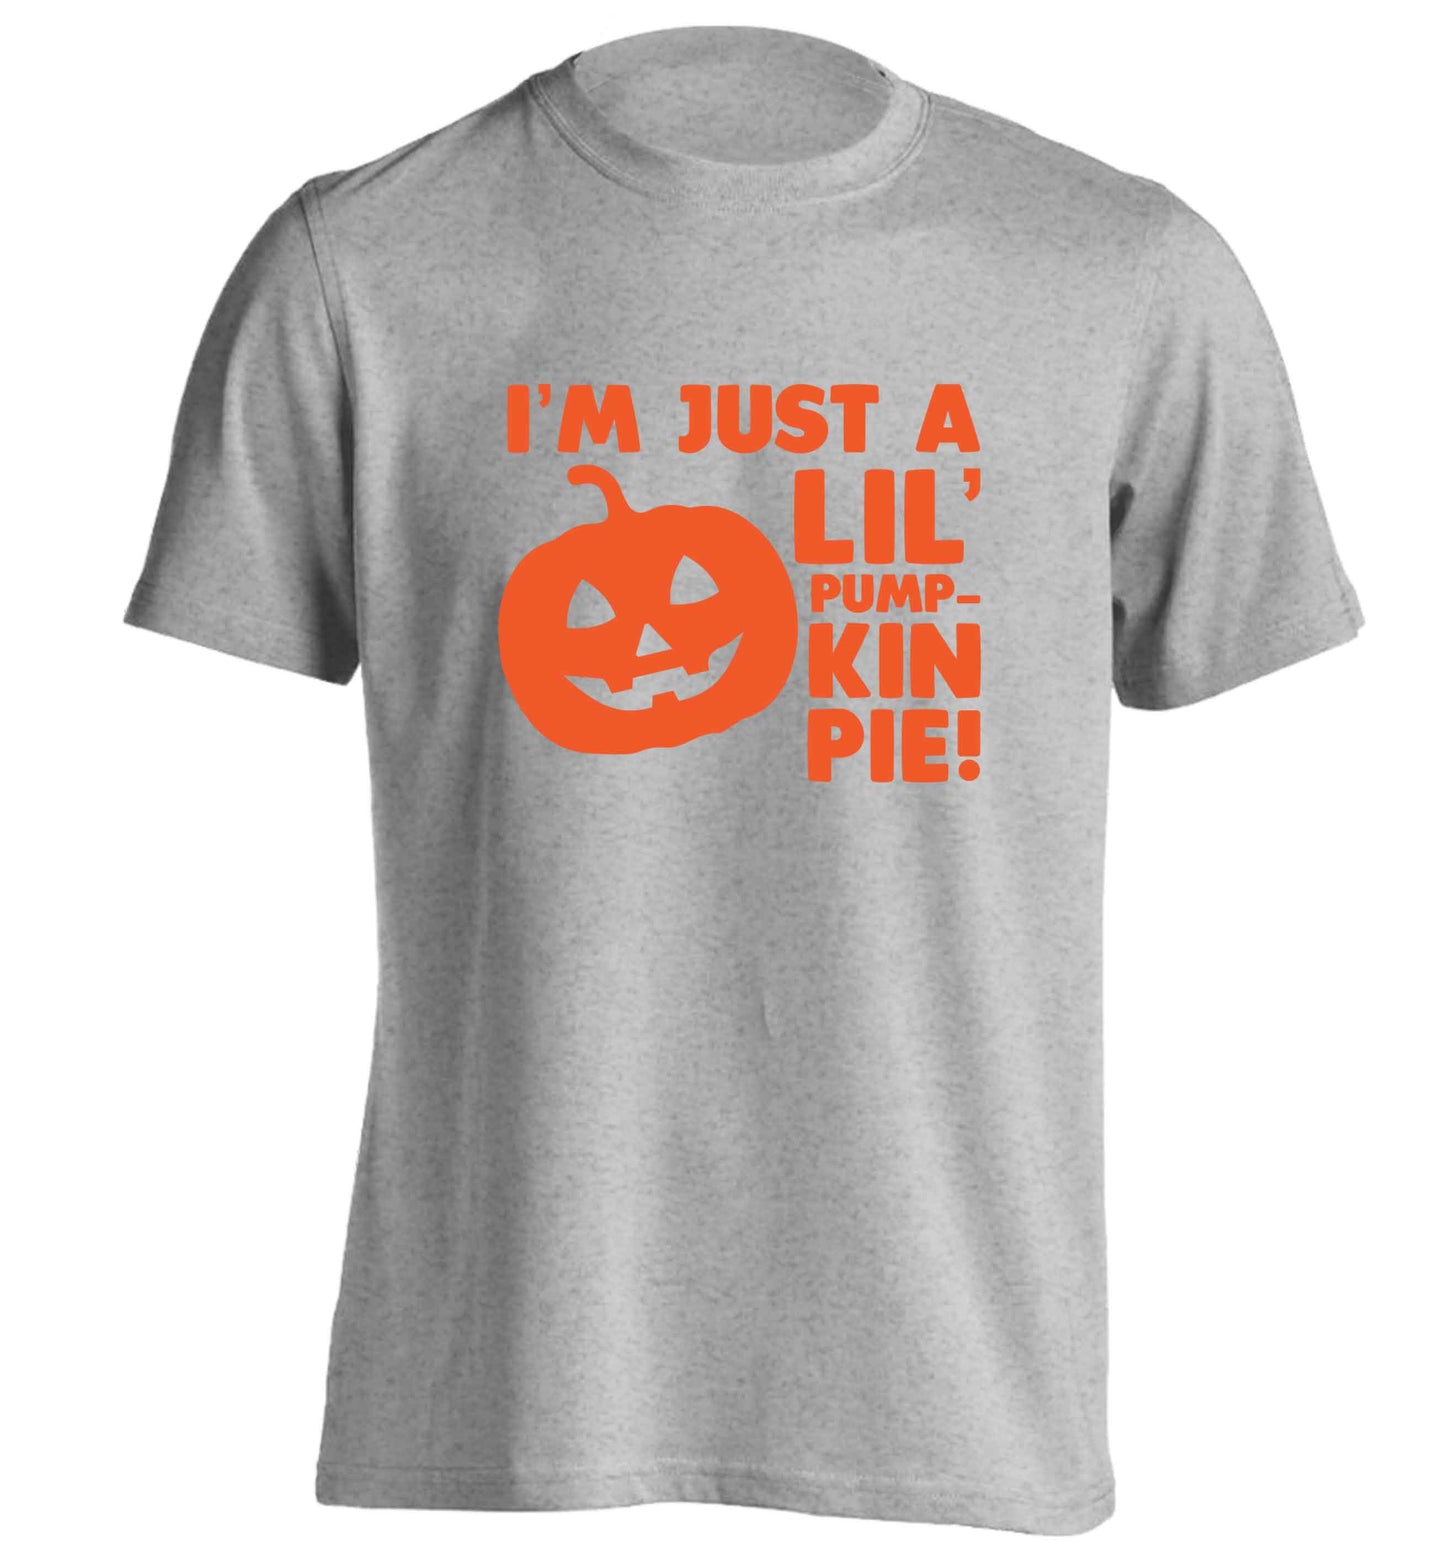 I'm just a lil' pumpkin pie adults unisex grey Tshirt 2XL